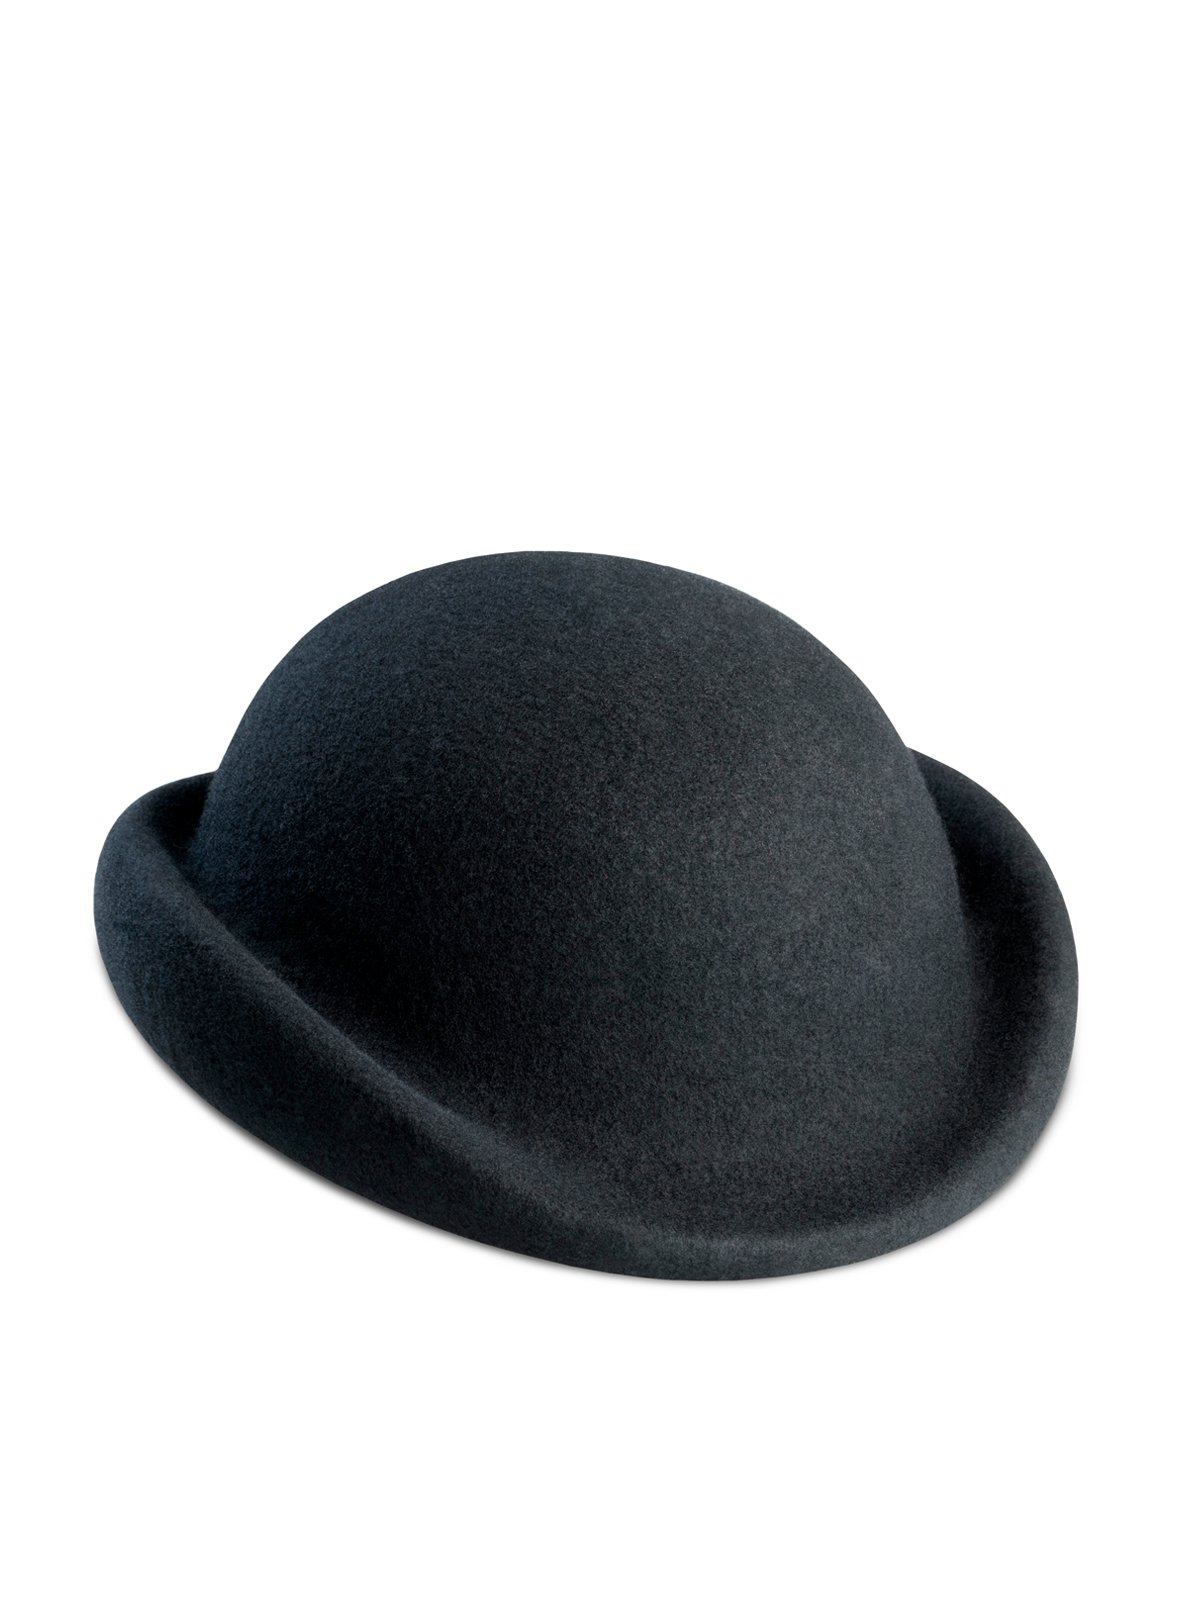 Midi Bowler Hat